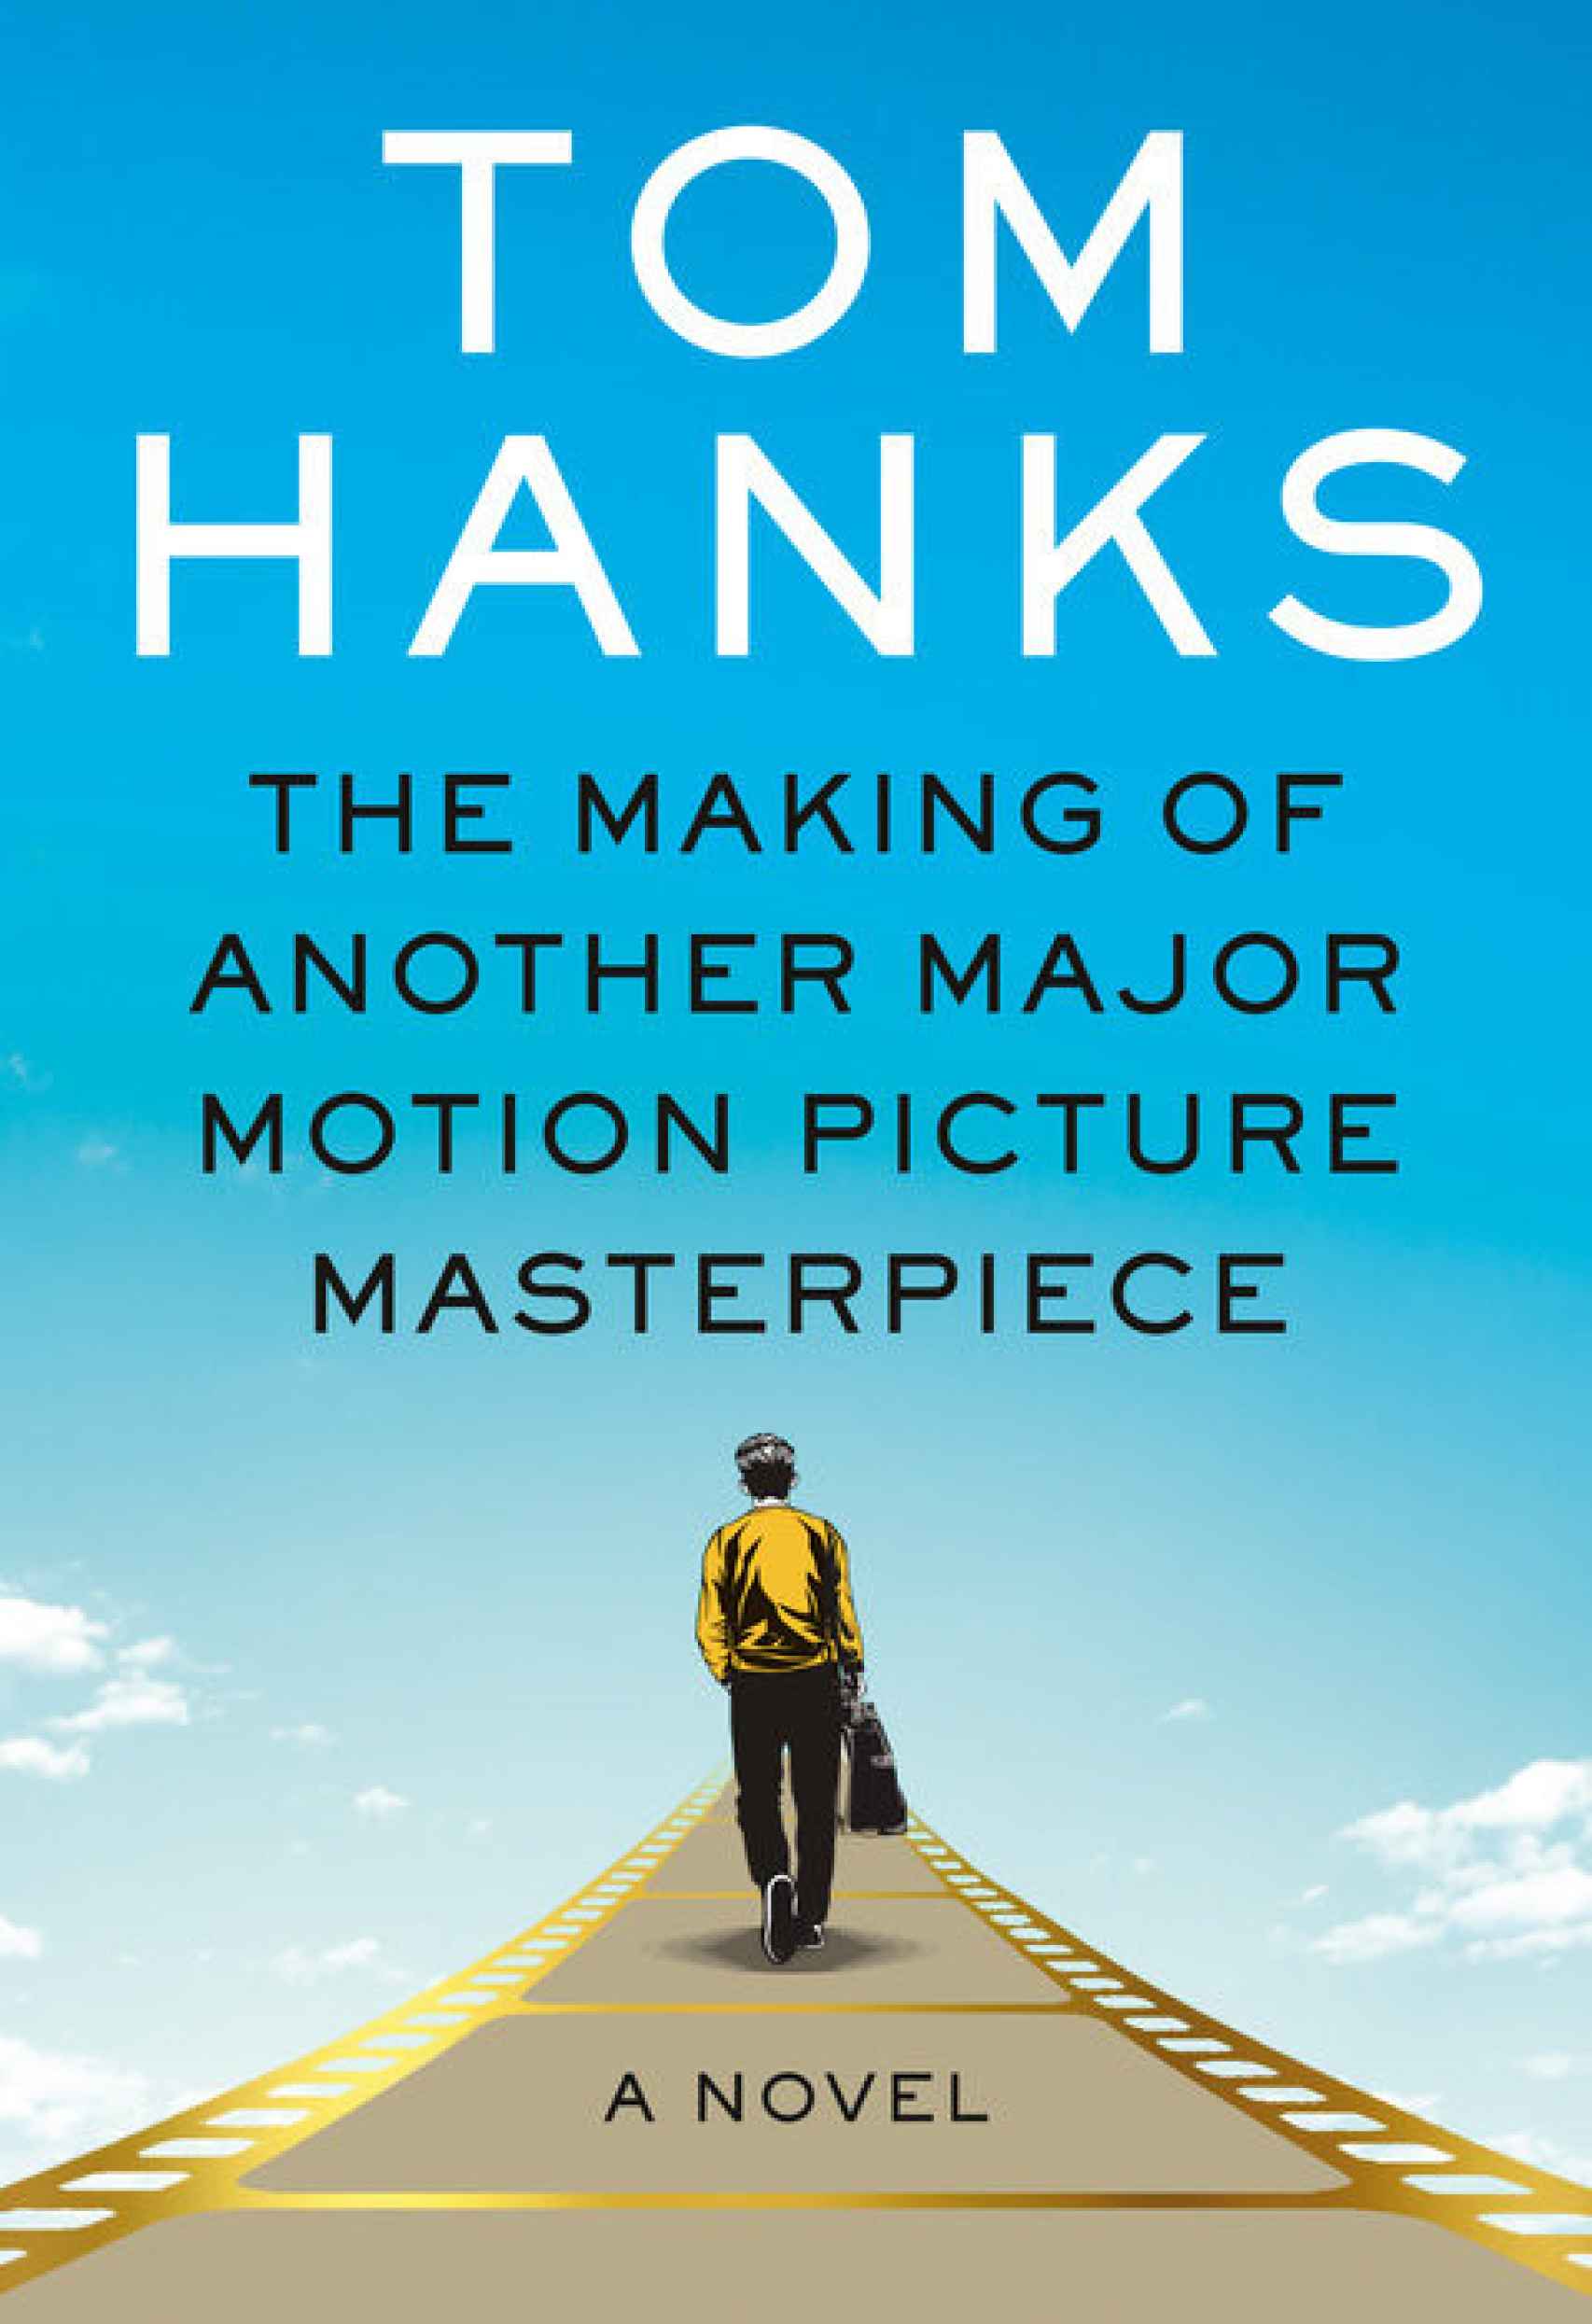 Portada de la primera novela de Tom Hanks. Foto: Penguin Random House